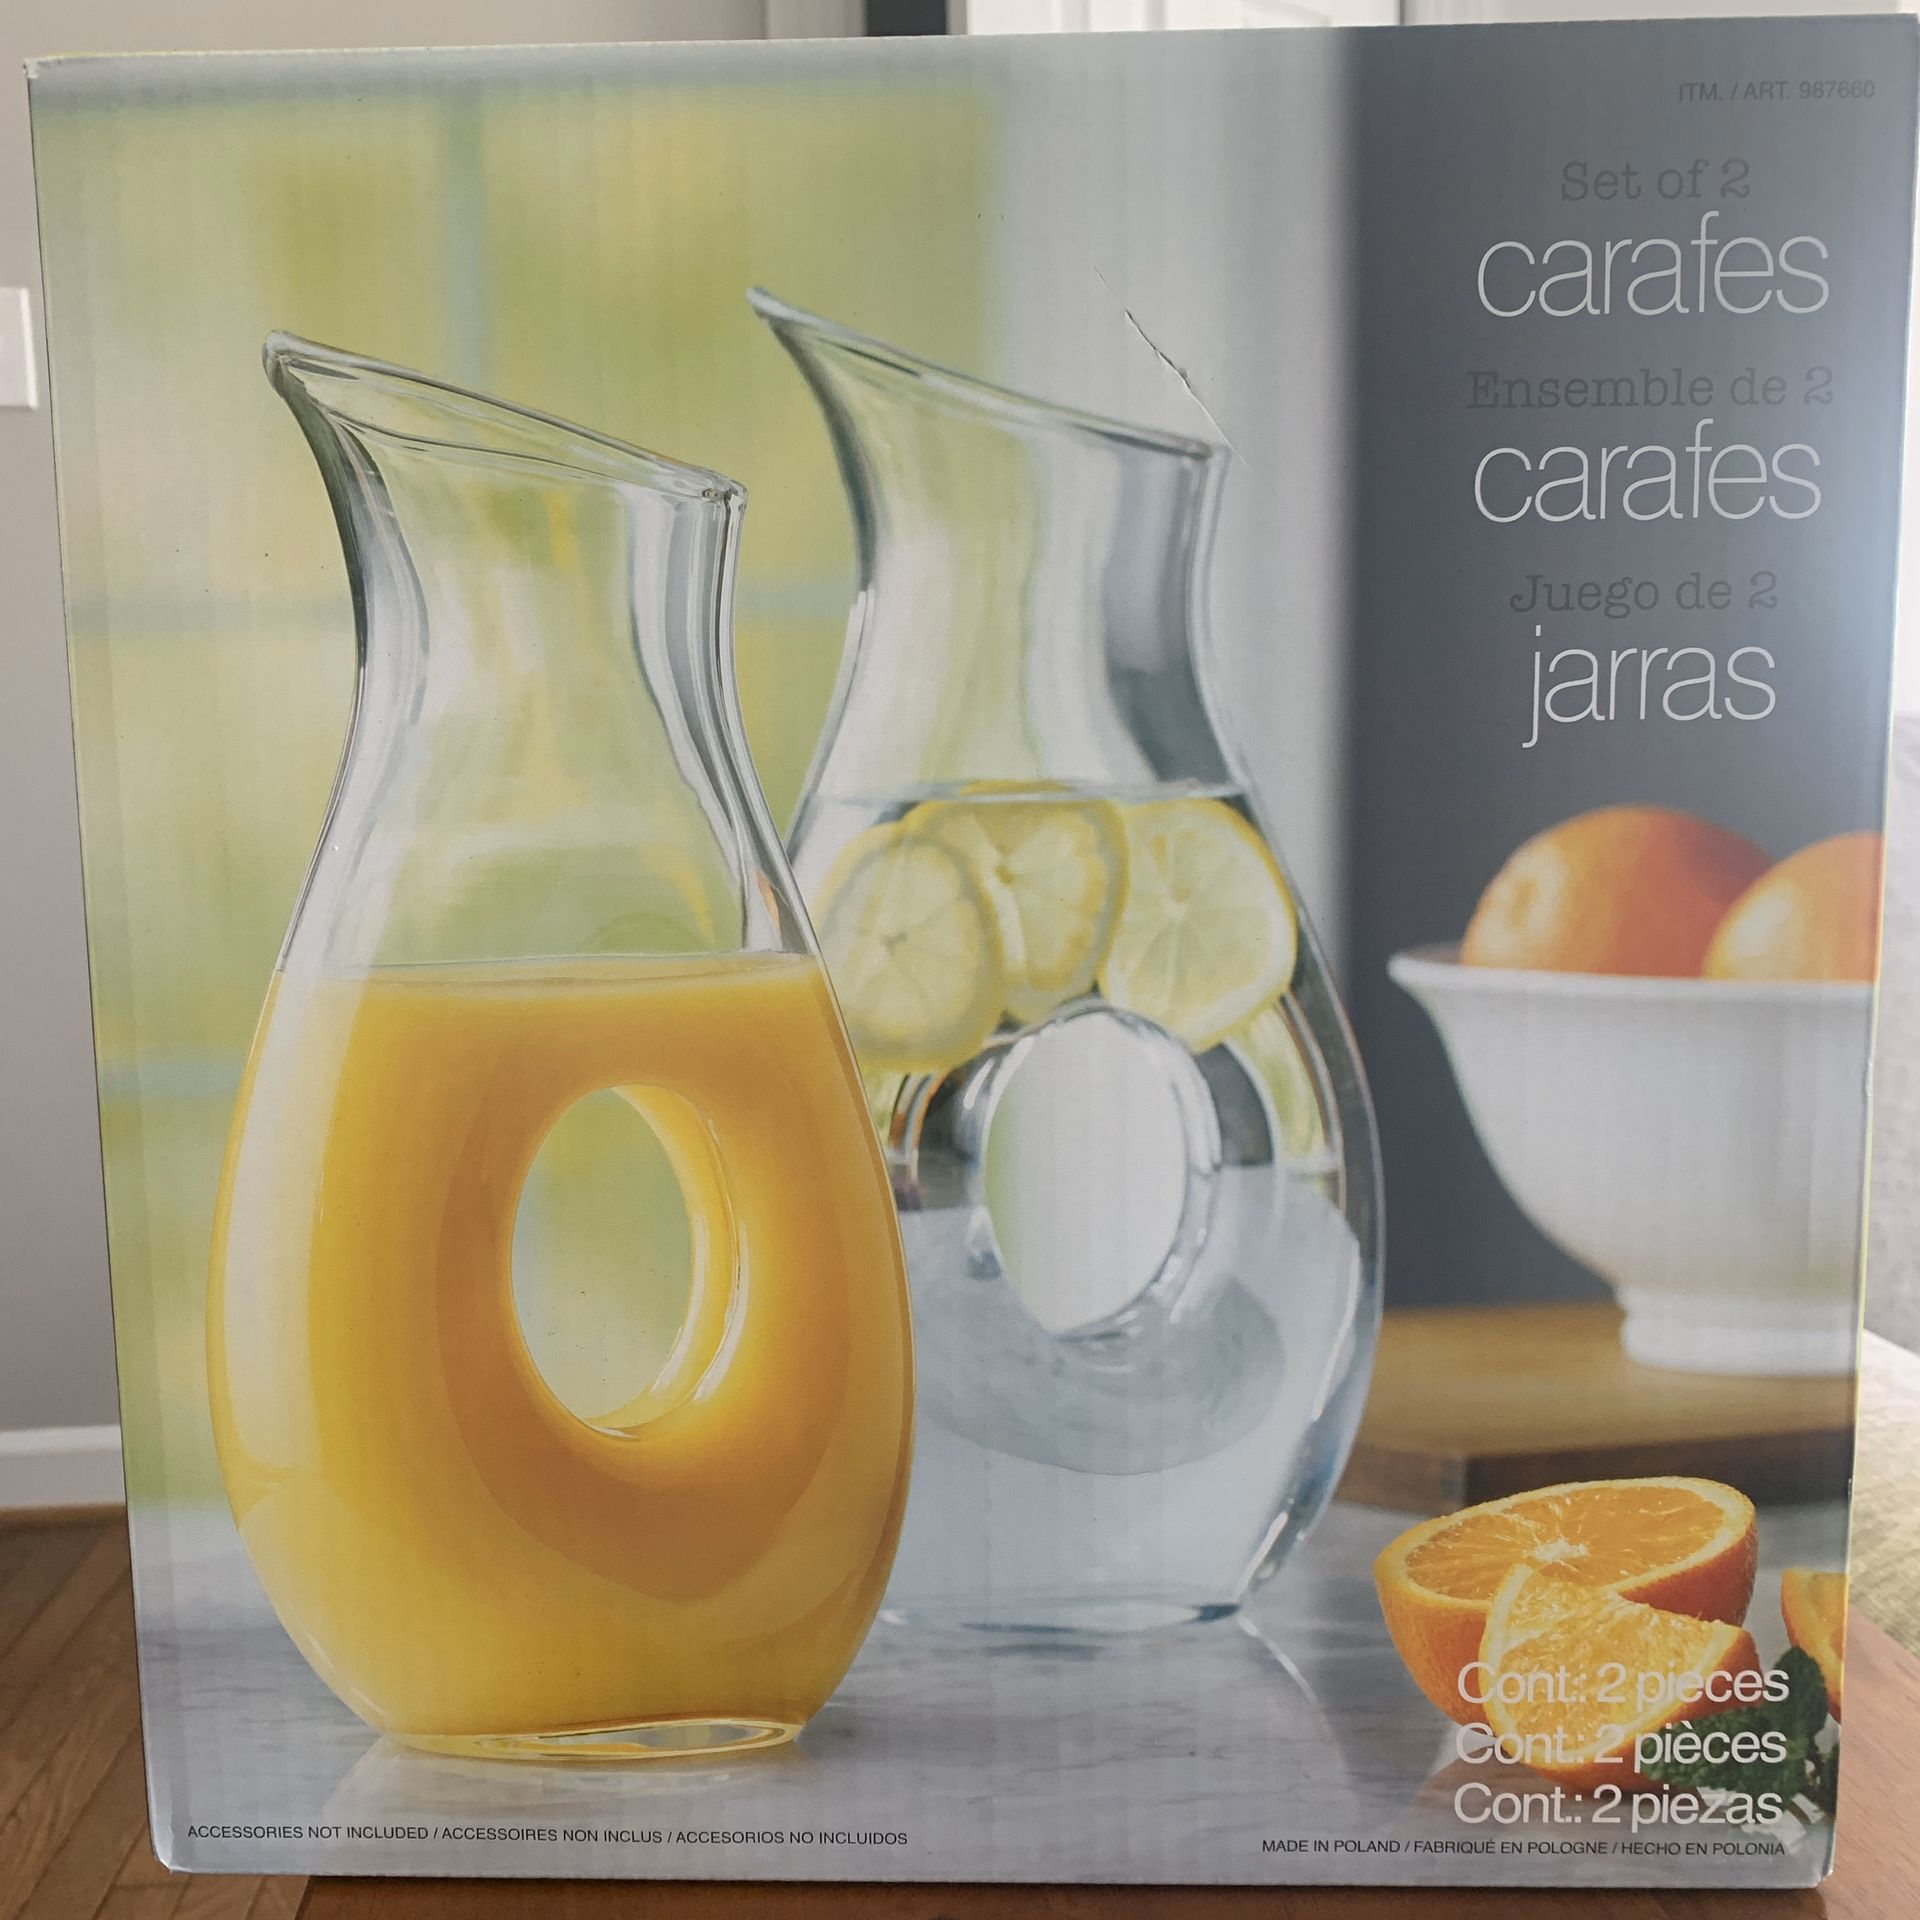 Carafes brand new glassware